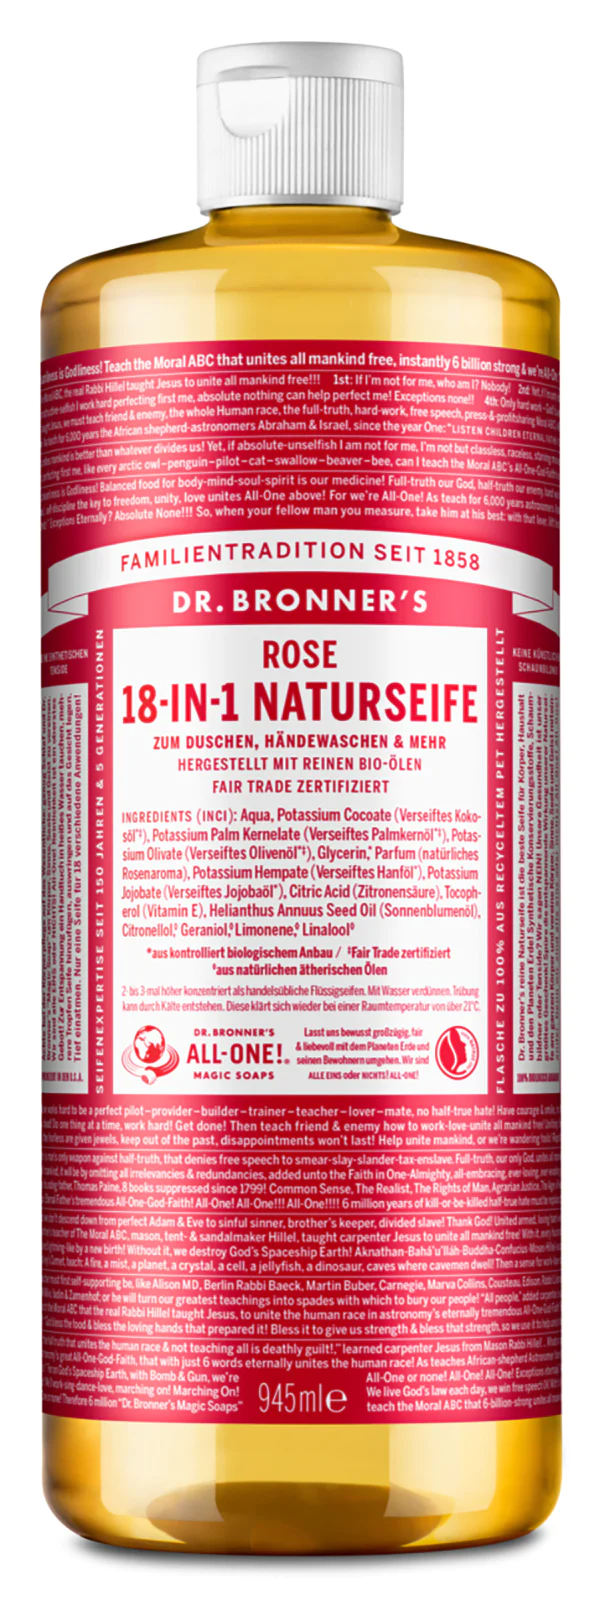 Dr Bronner 18-IN-1 NATURSEIFE Rose 945ml